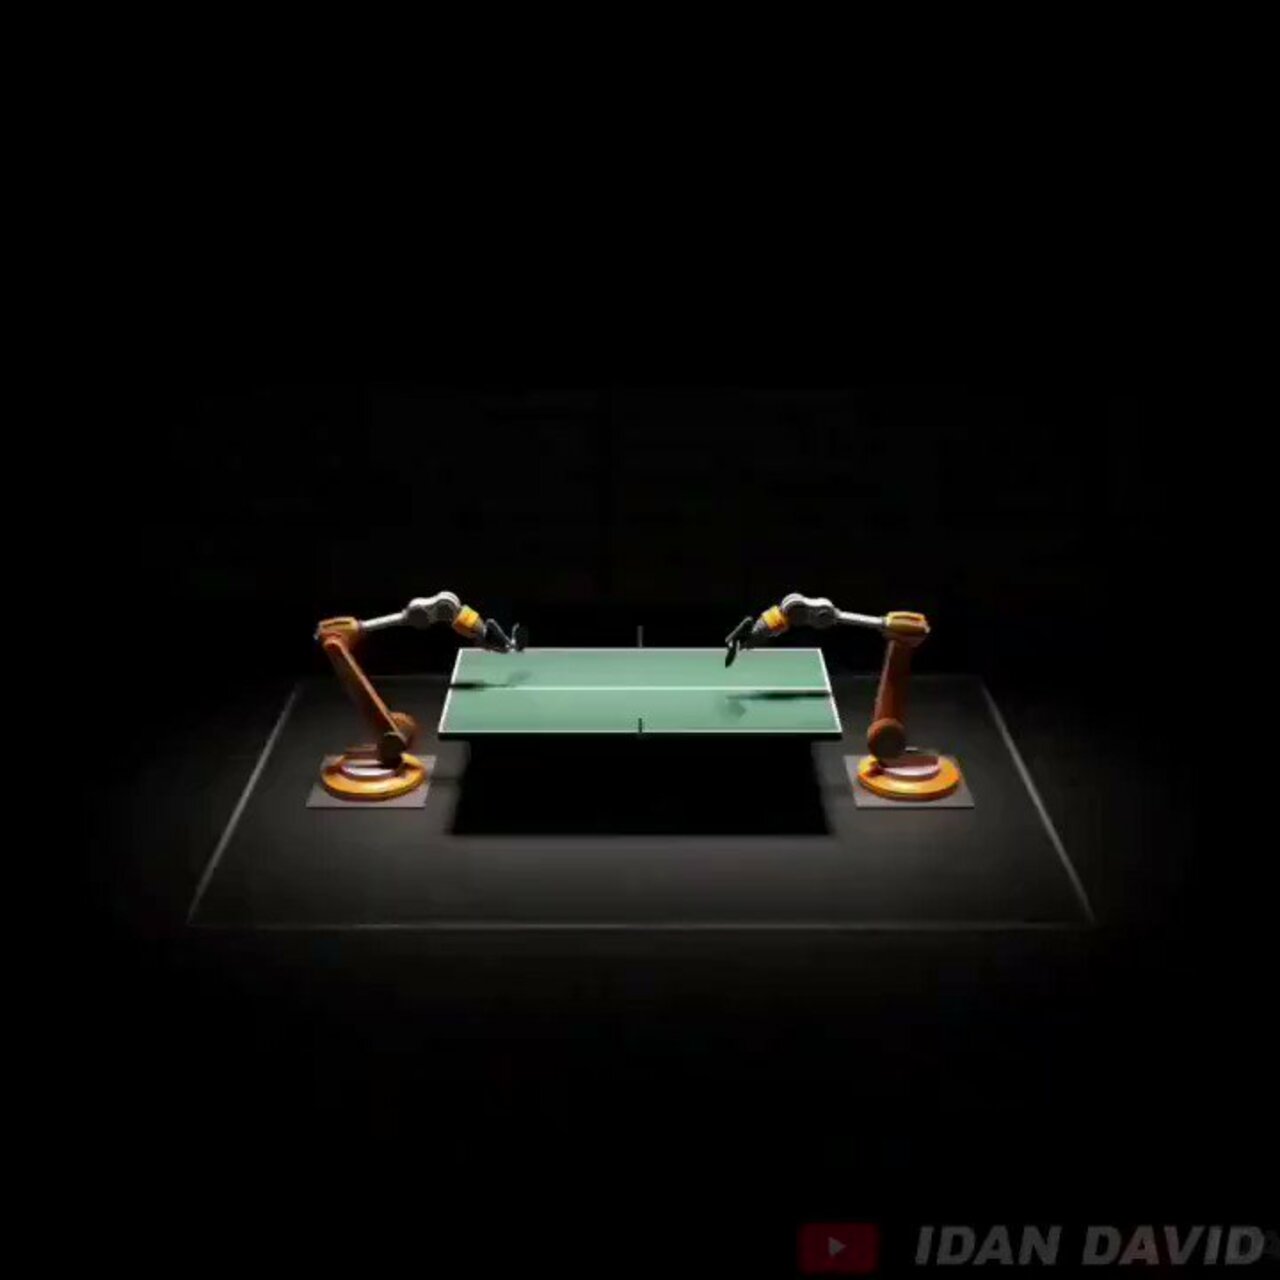 #Robot playing Table Tennis via @jblefevre60 #AI #ArtificialIntelligence #MI #Robotics #Sports #Innovation #RPA #Automation  cc: @ronald_vanloon @pbalakrishnarao @chr1sa https://t.co/iOsQdwonfA